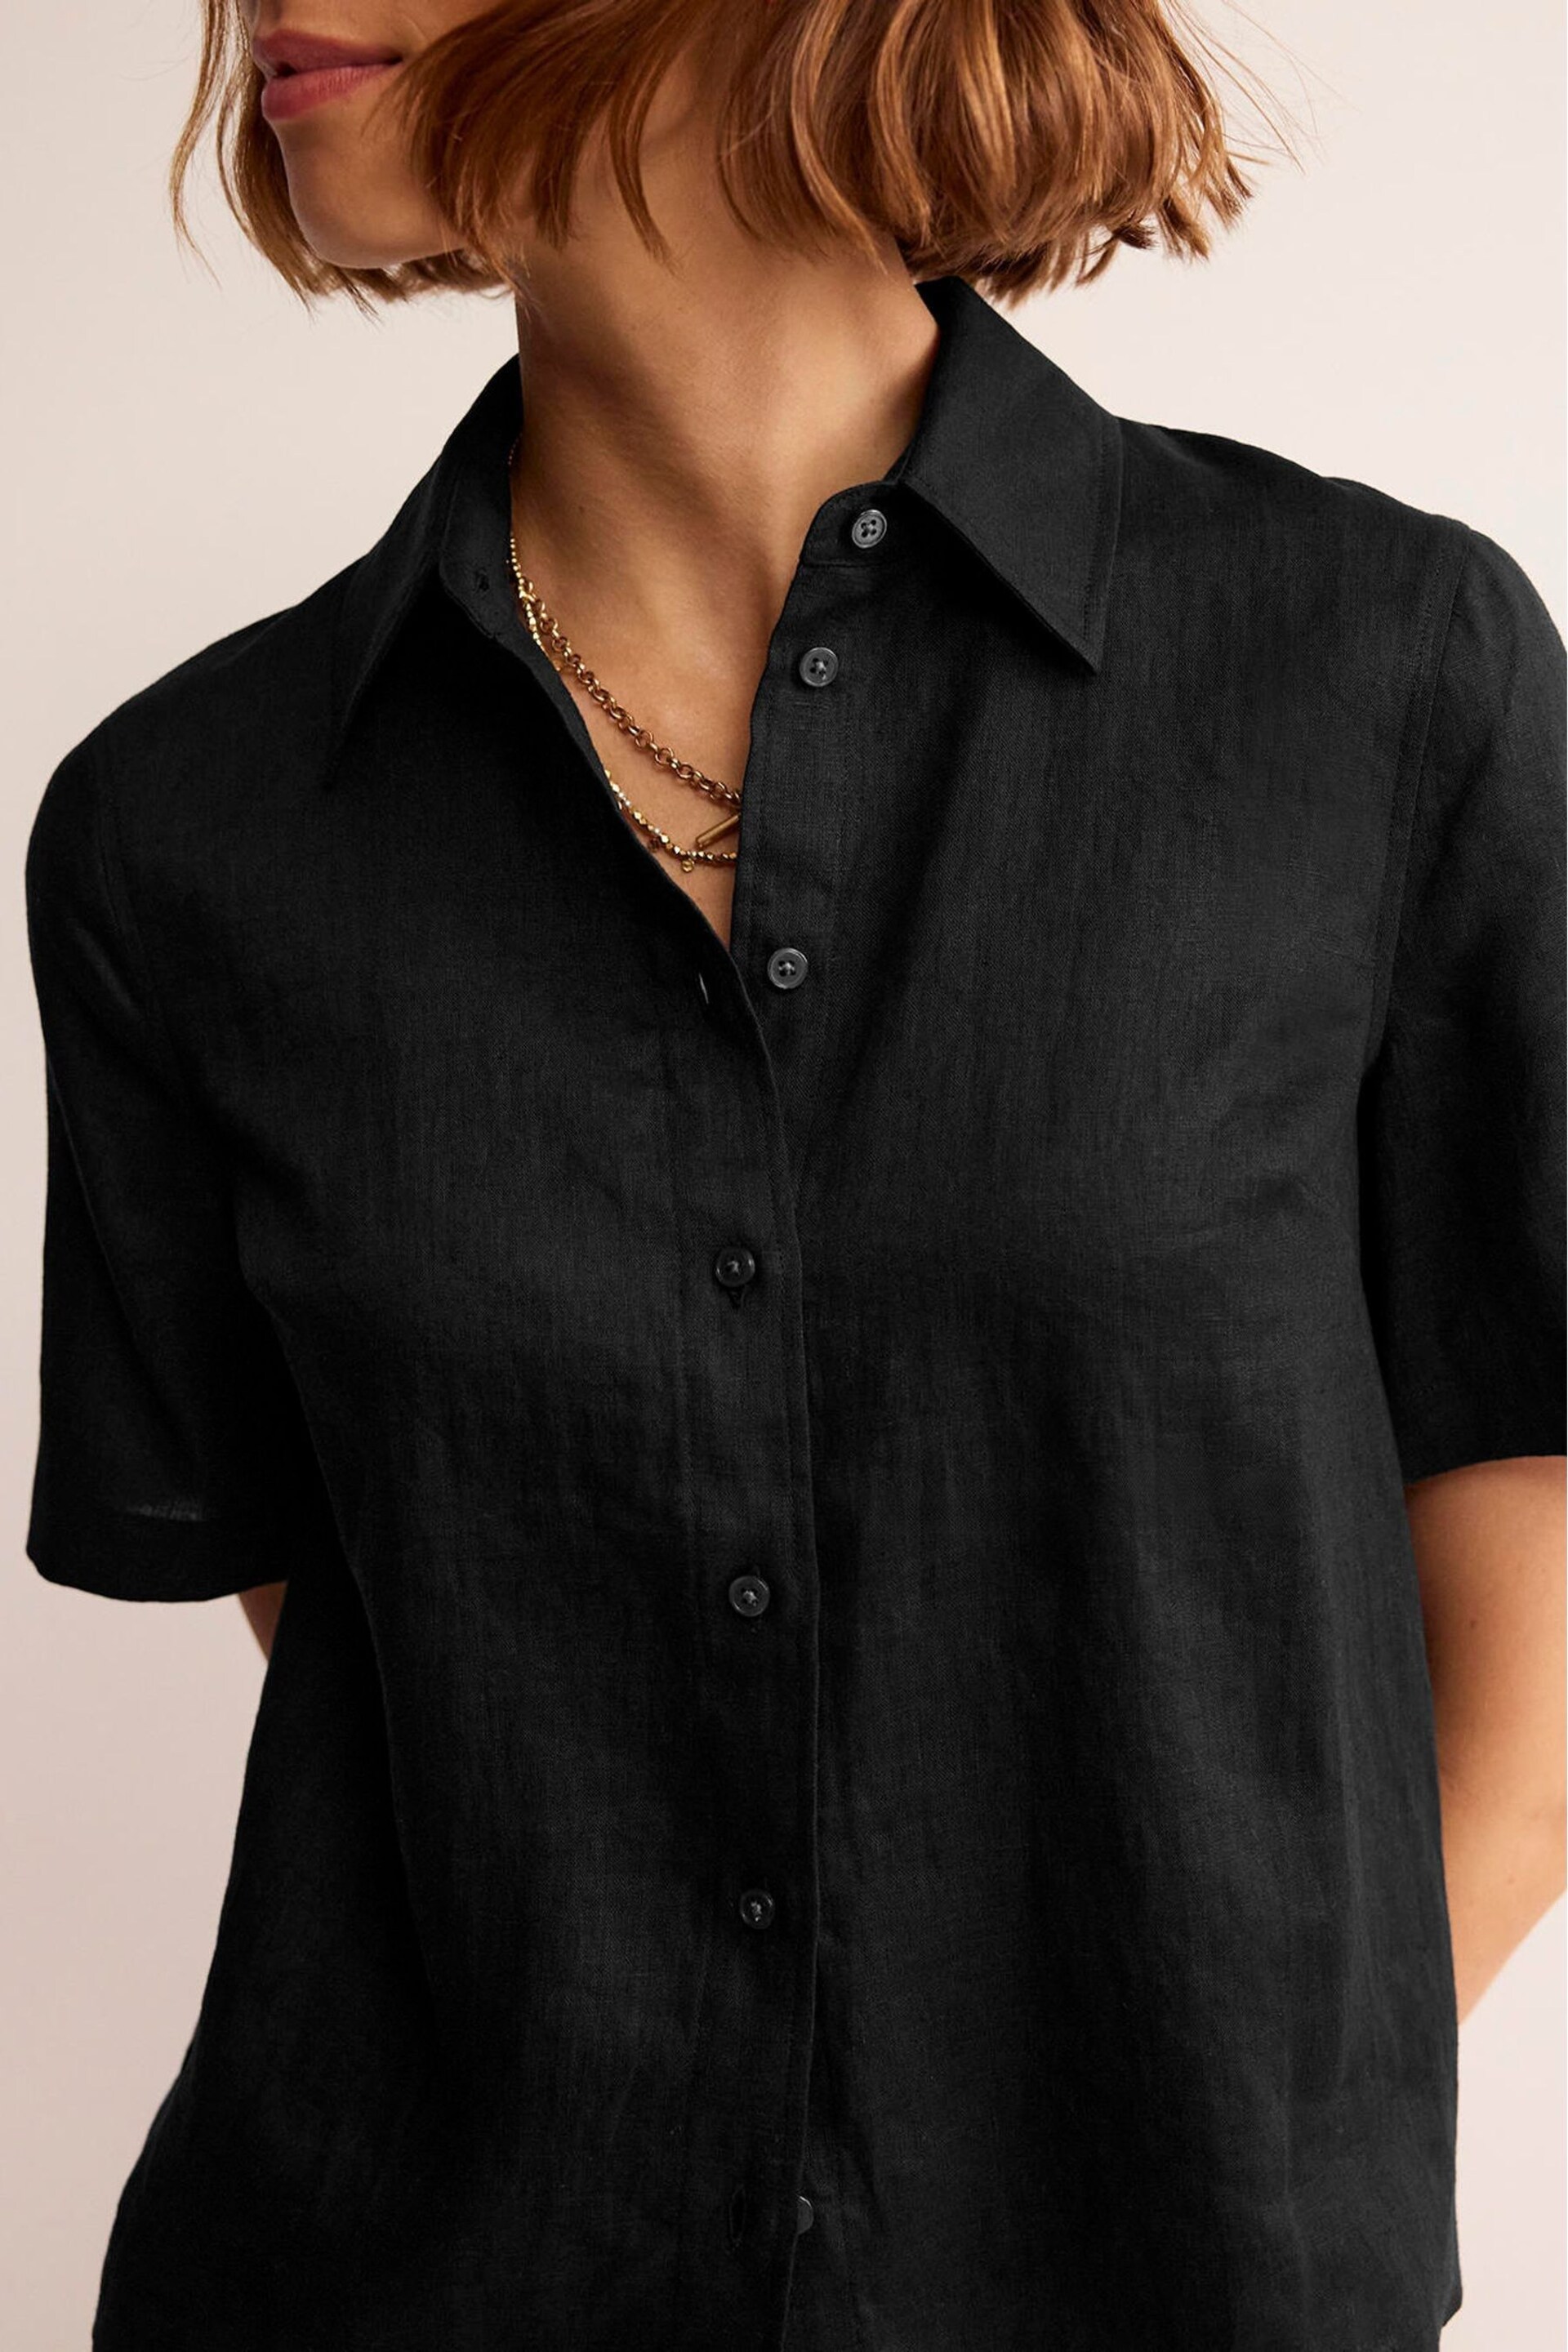 Boden Black Hazel Short Sleeve Linen Shirt - Image 2 of 5